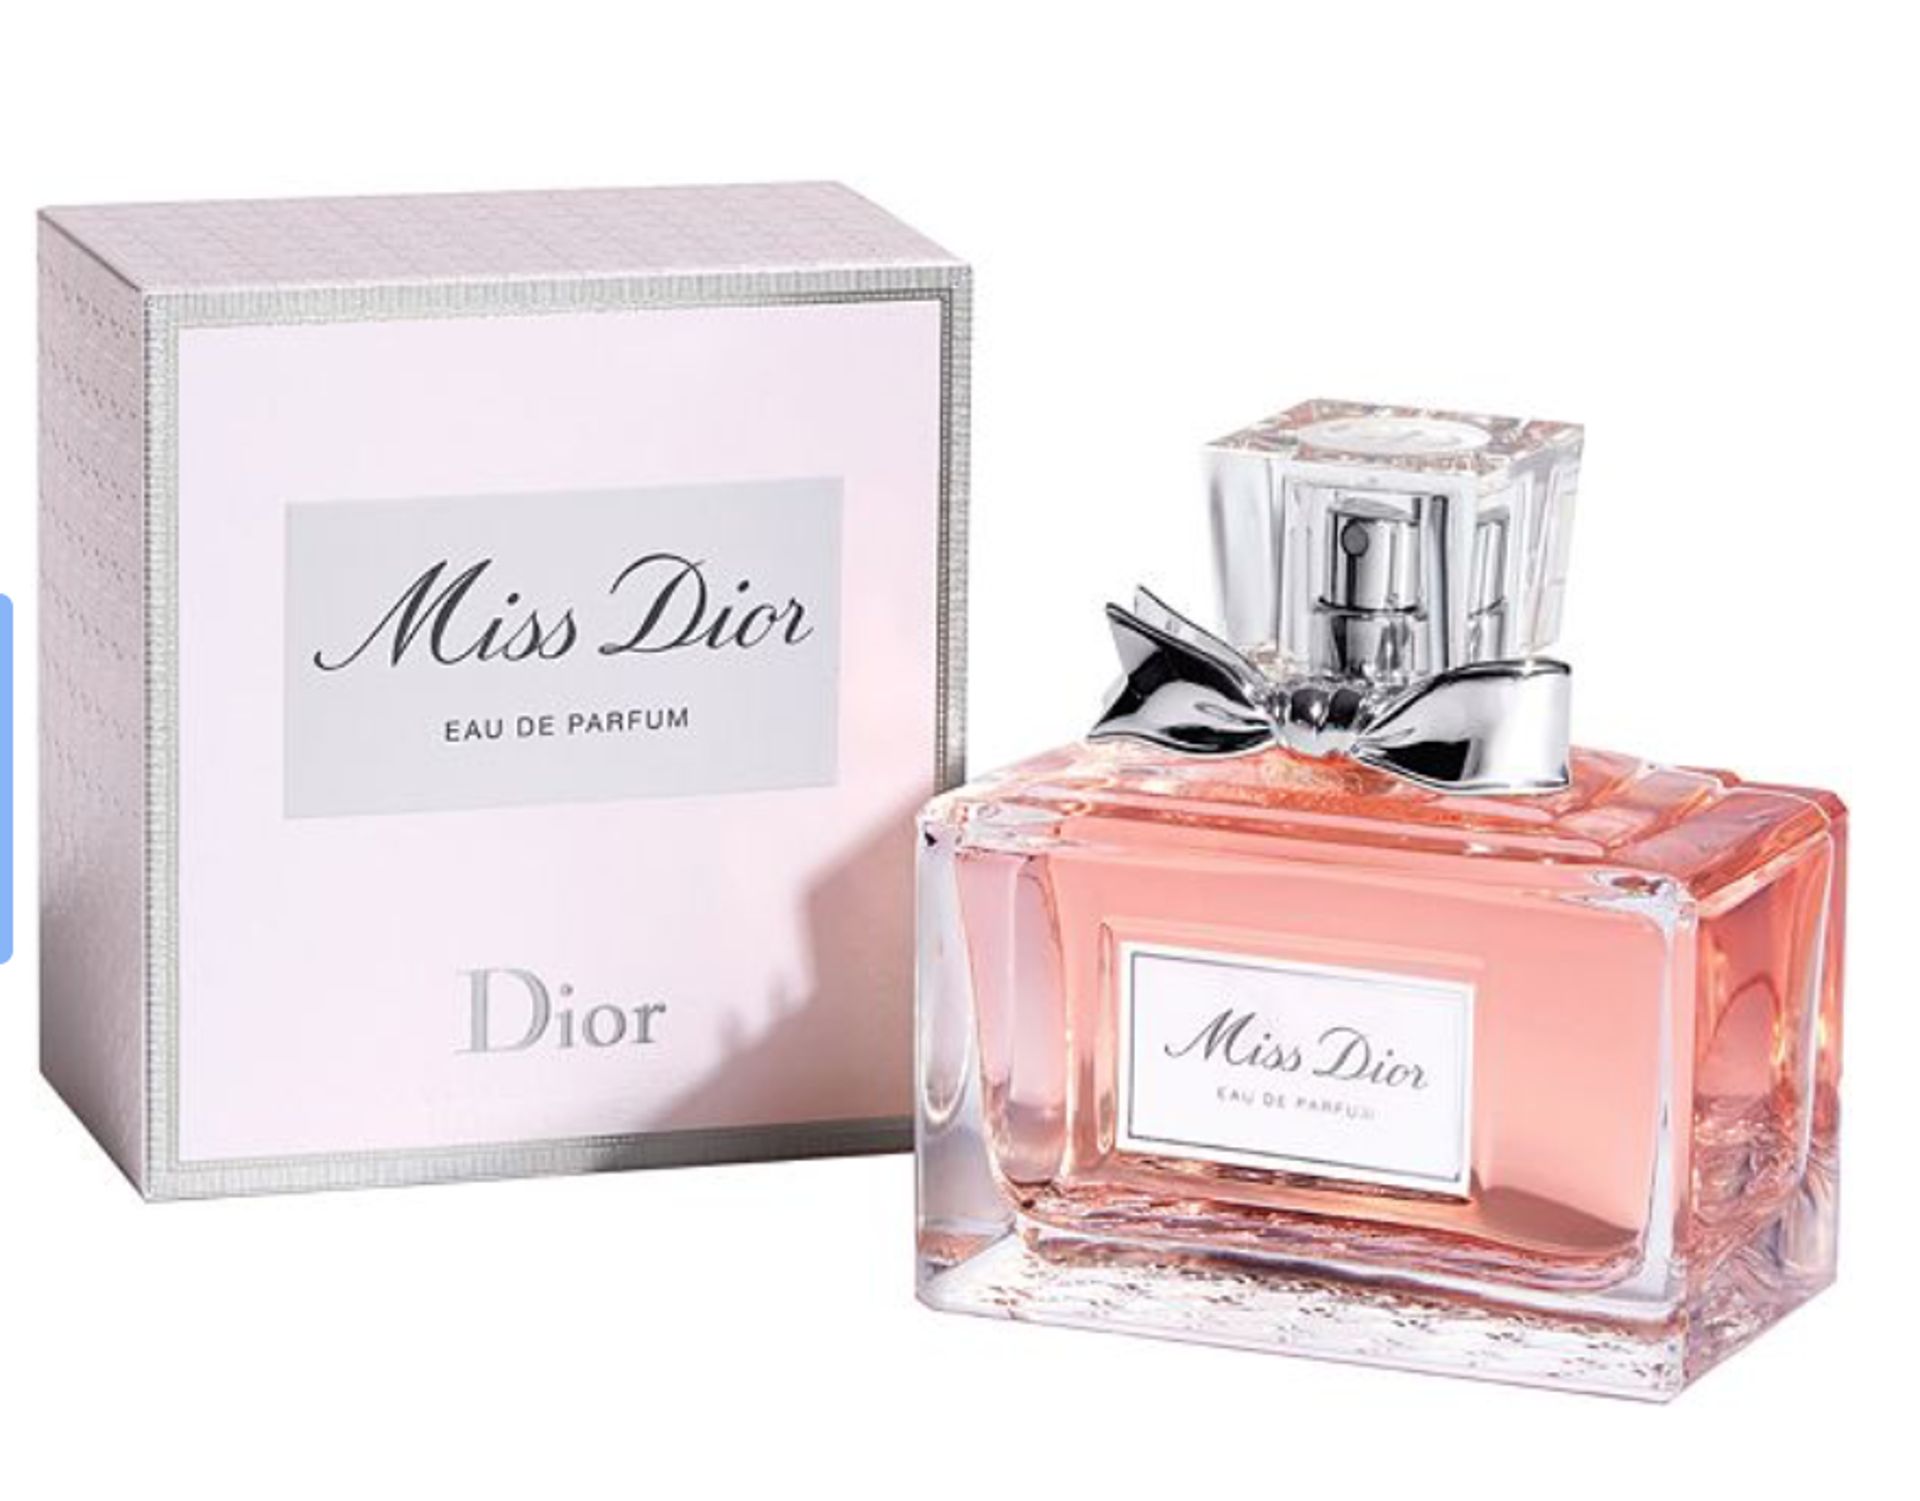 Dior Miss Dior Eau de Parfum Spray, 1.7 